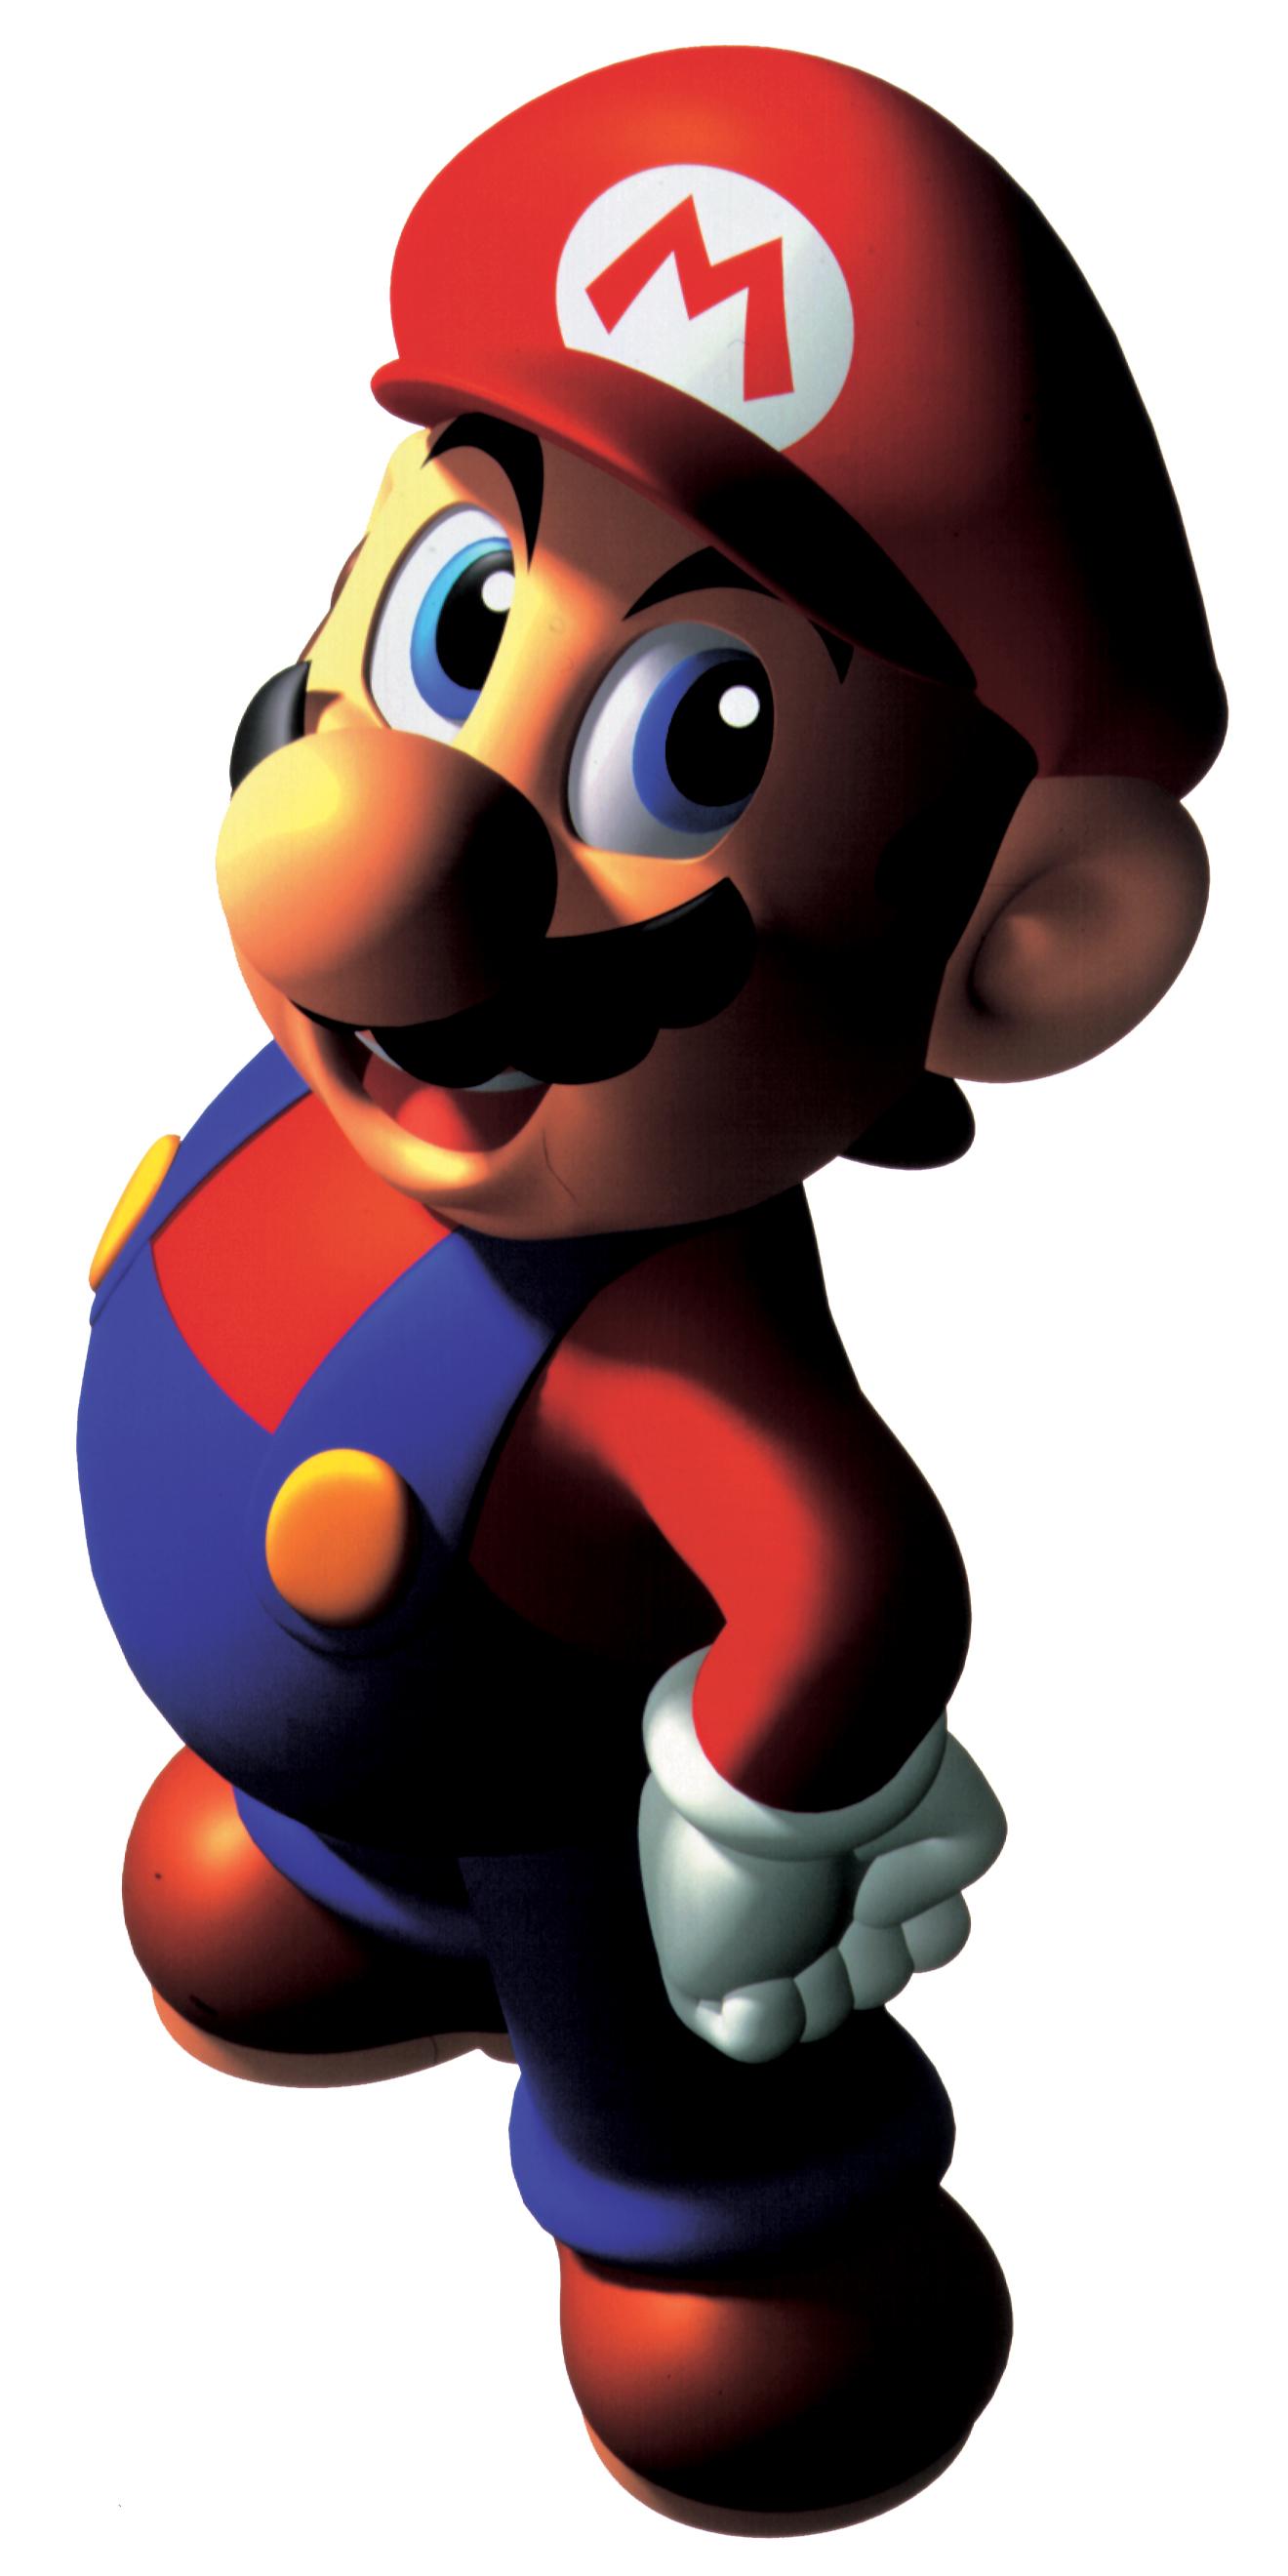 Mario64smile.jpg